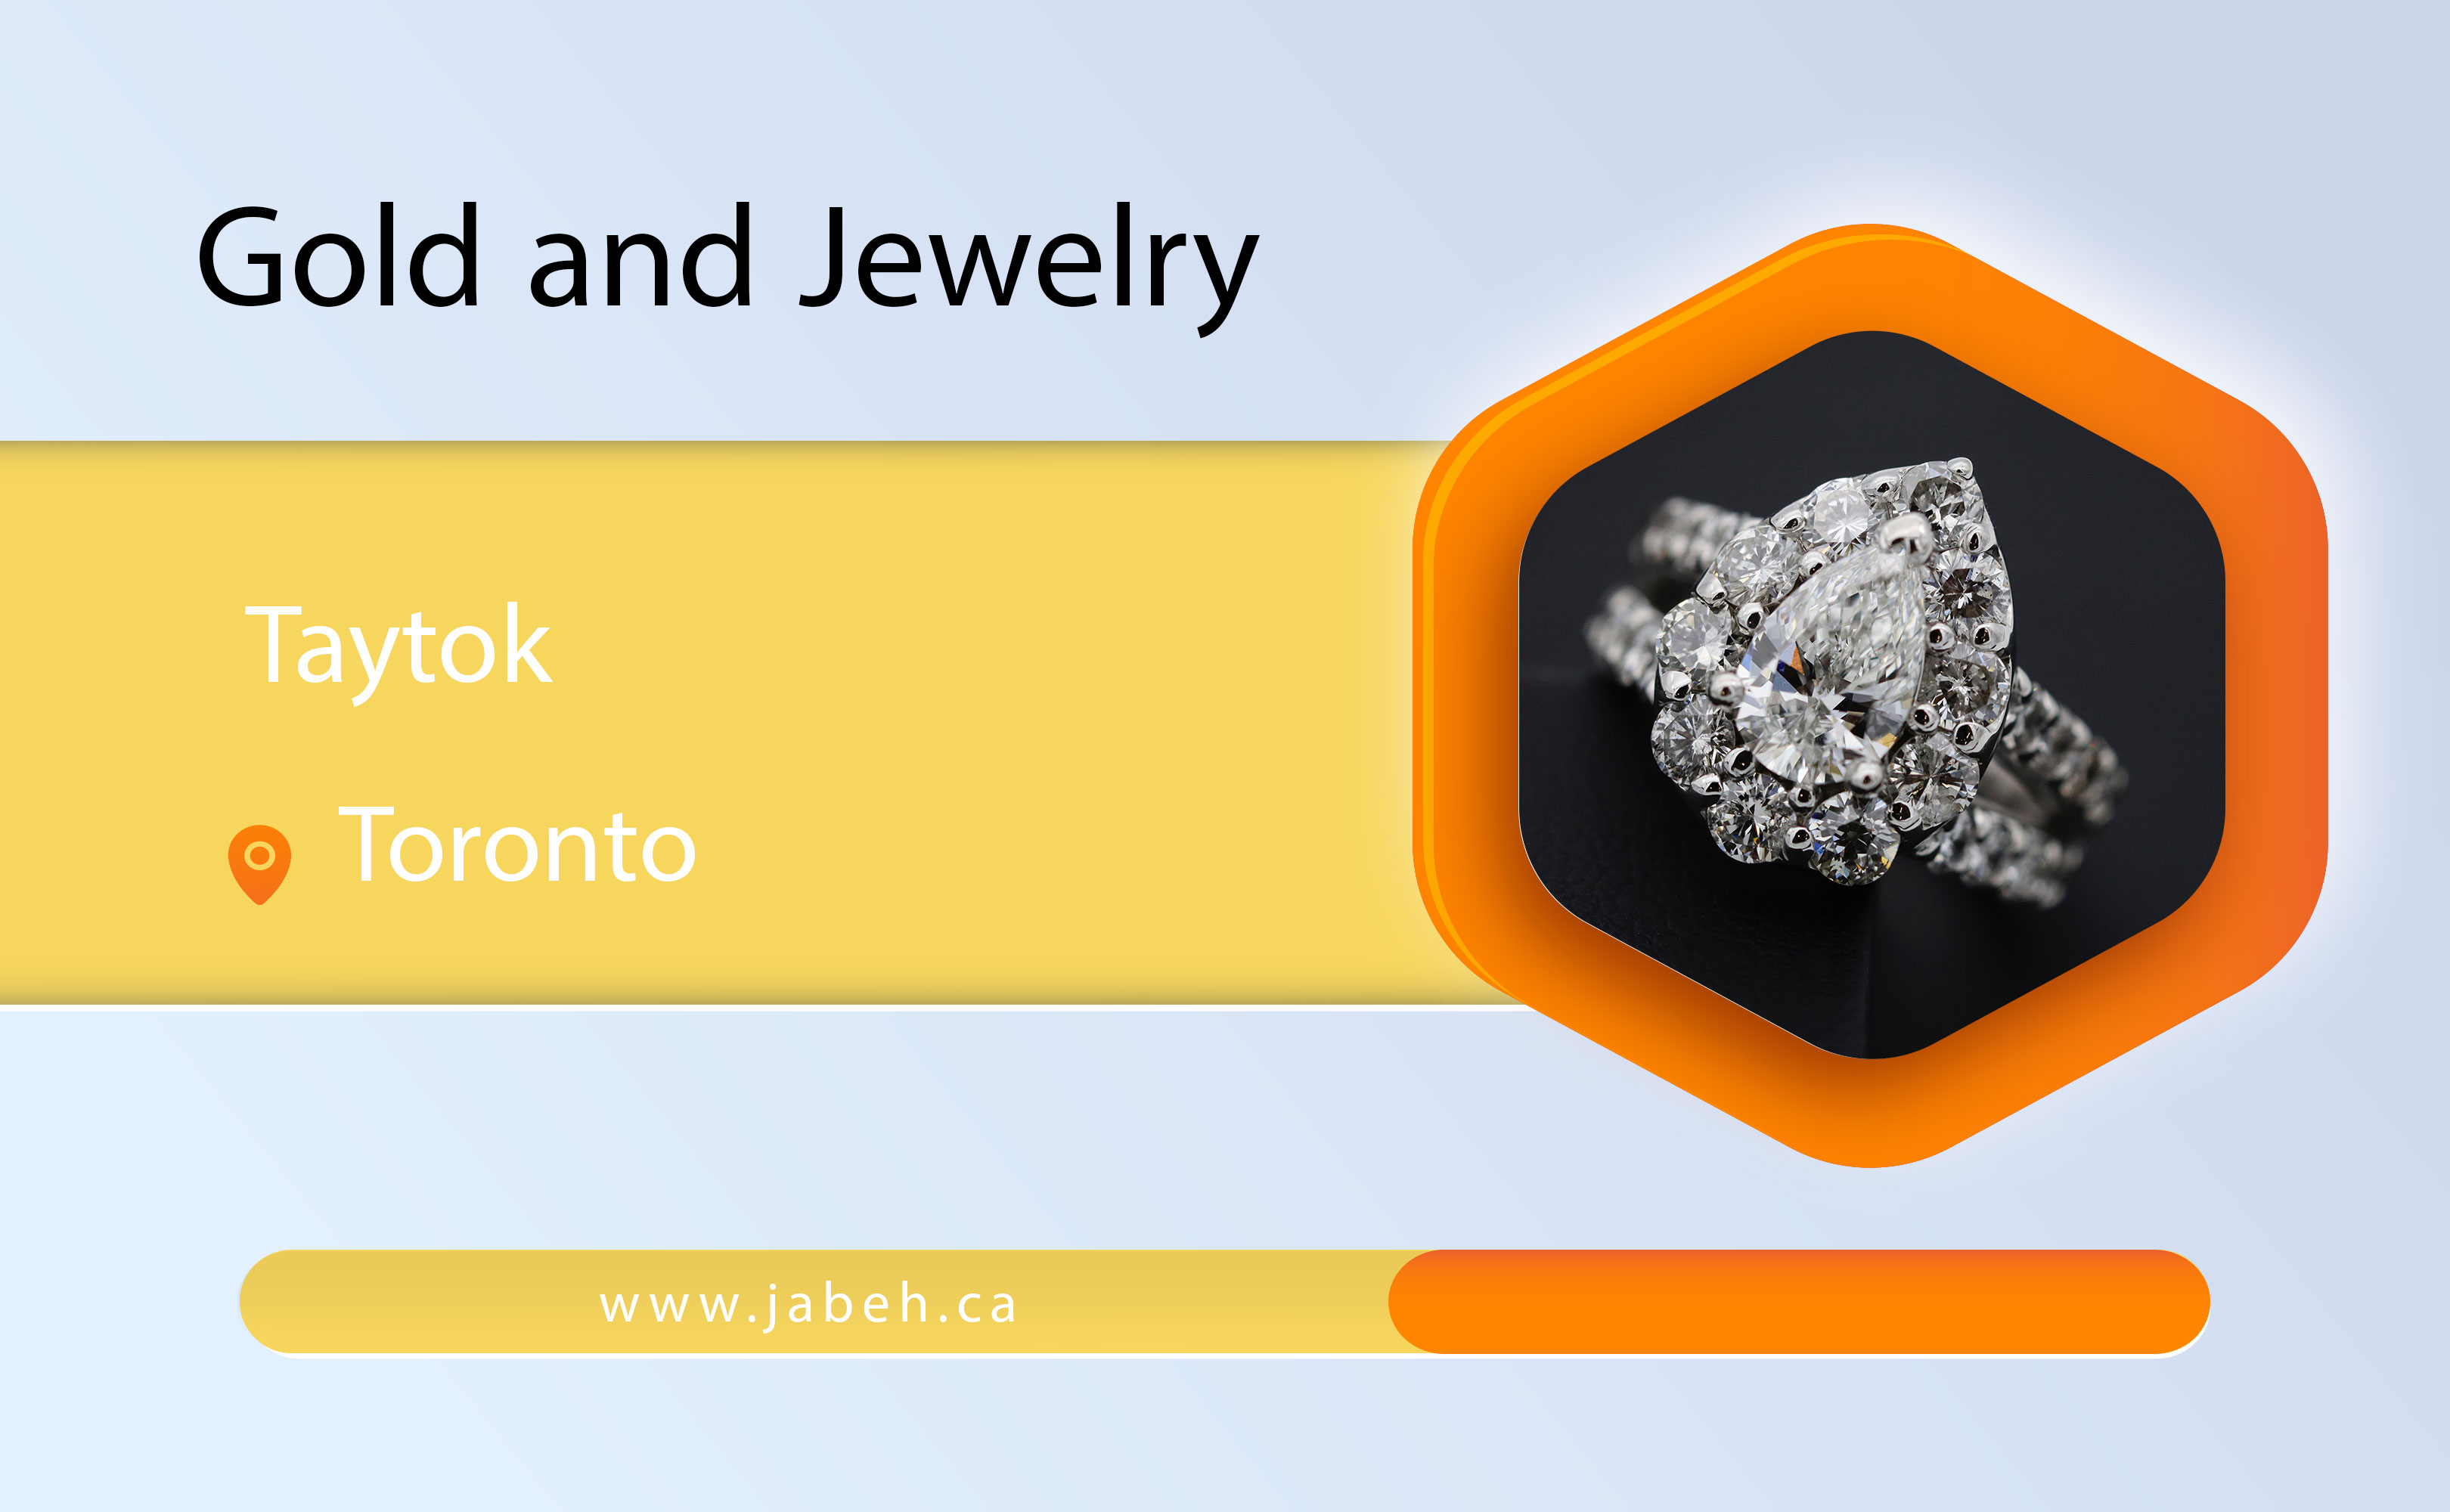 Taituk Iranian gold and jewelry in Ontario